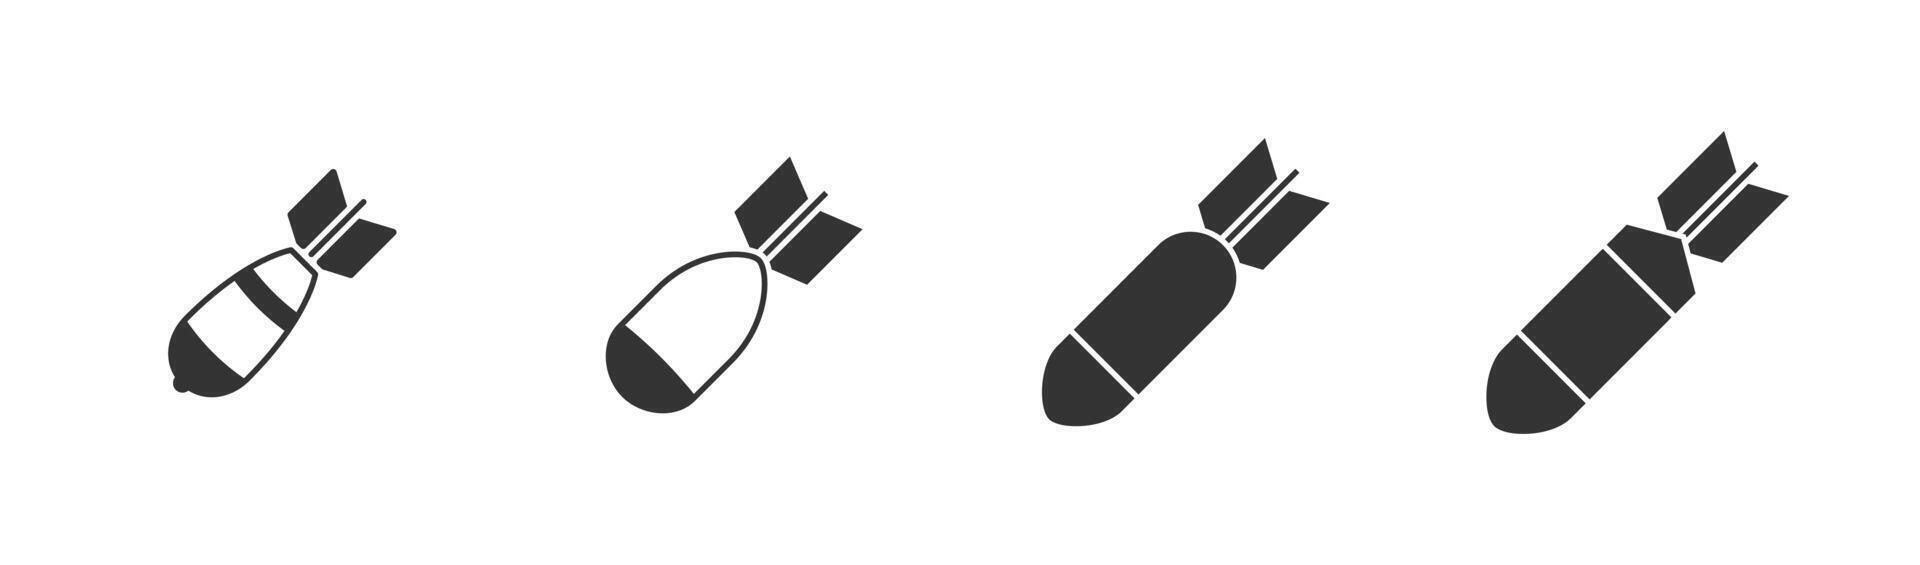 Luft Bombe Symbol Satz. atomar Bombe. nuklear Bombe. Vektor Illustration.